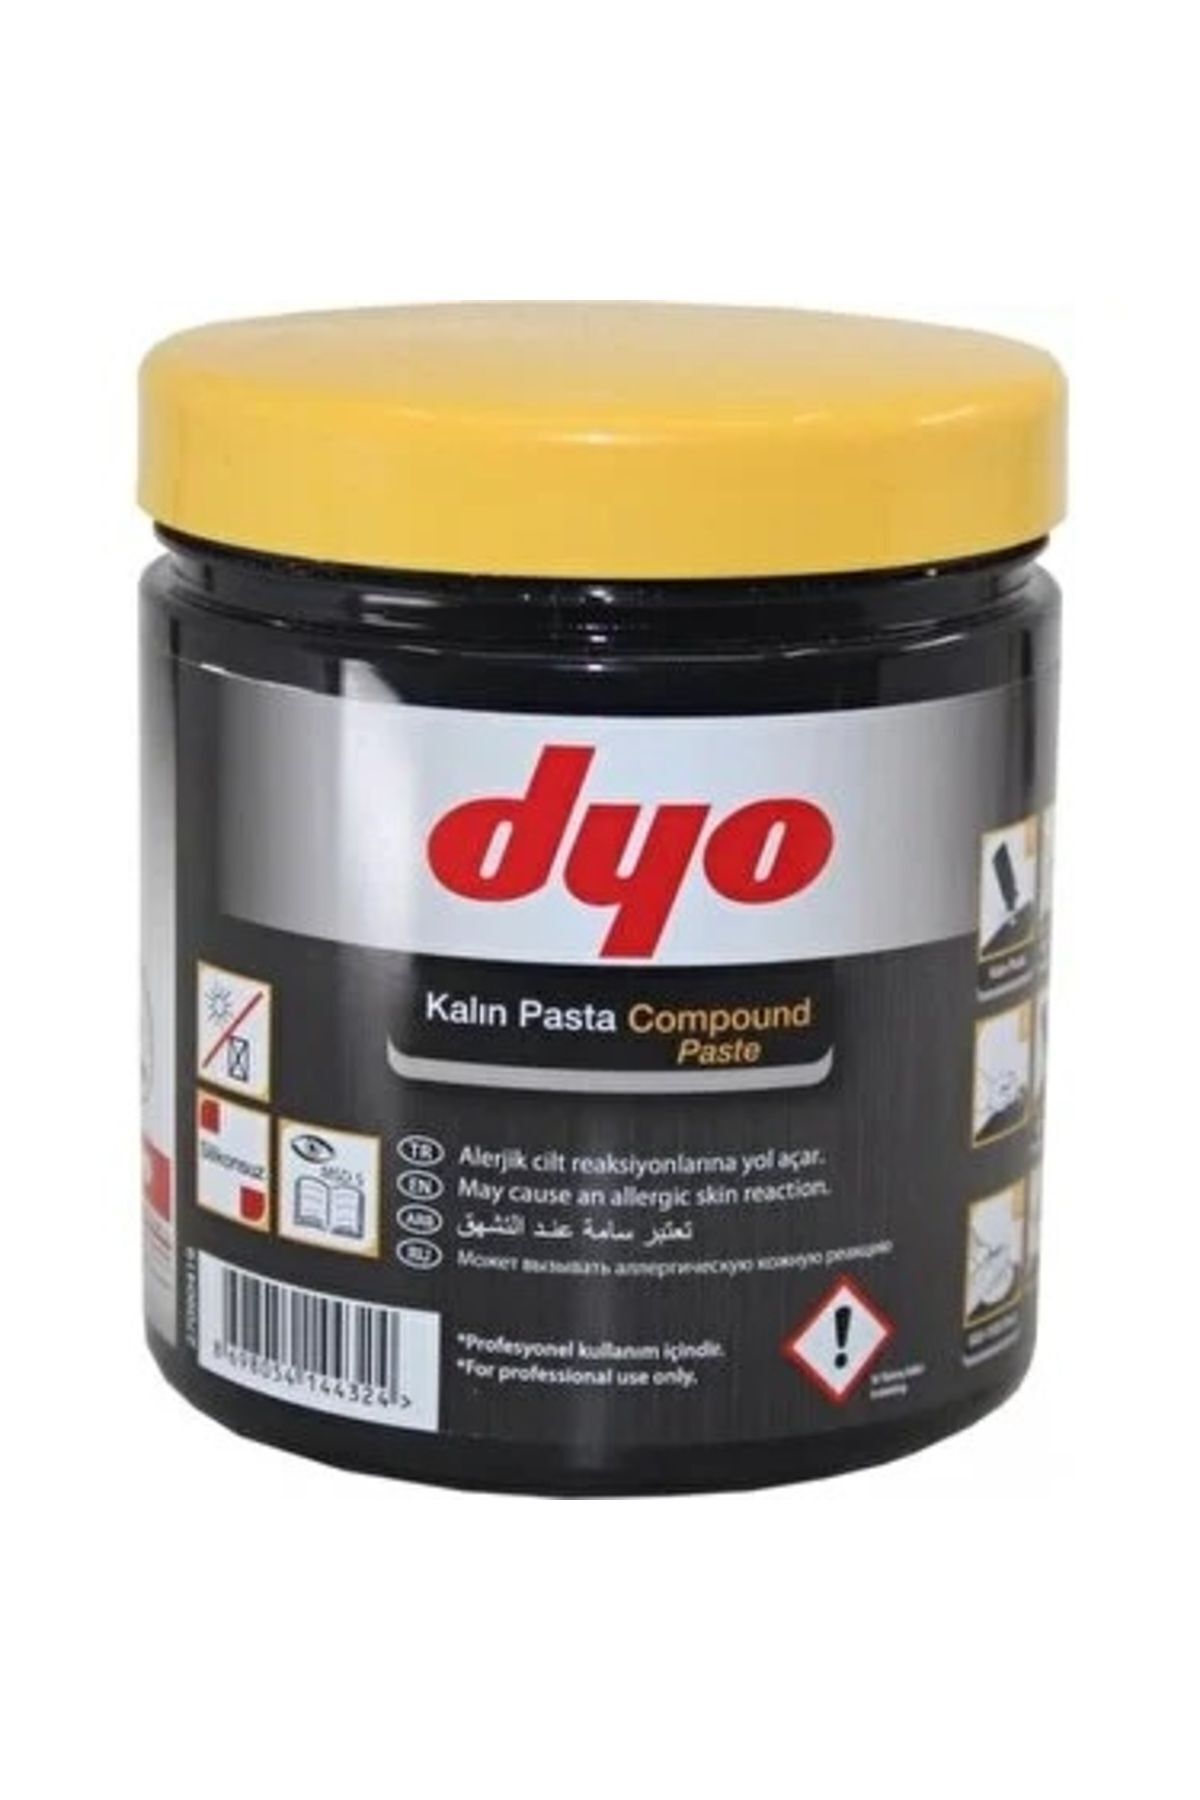 Dyo Compound Paste (KALIN PASTA) 1 Kg